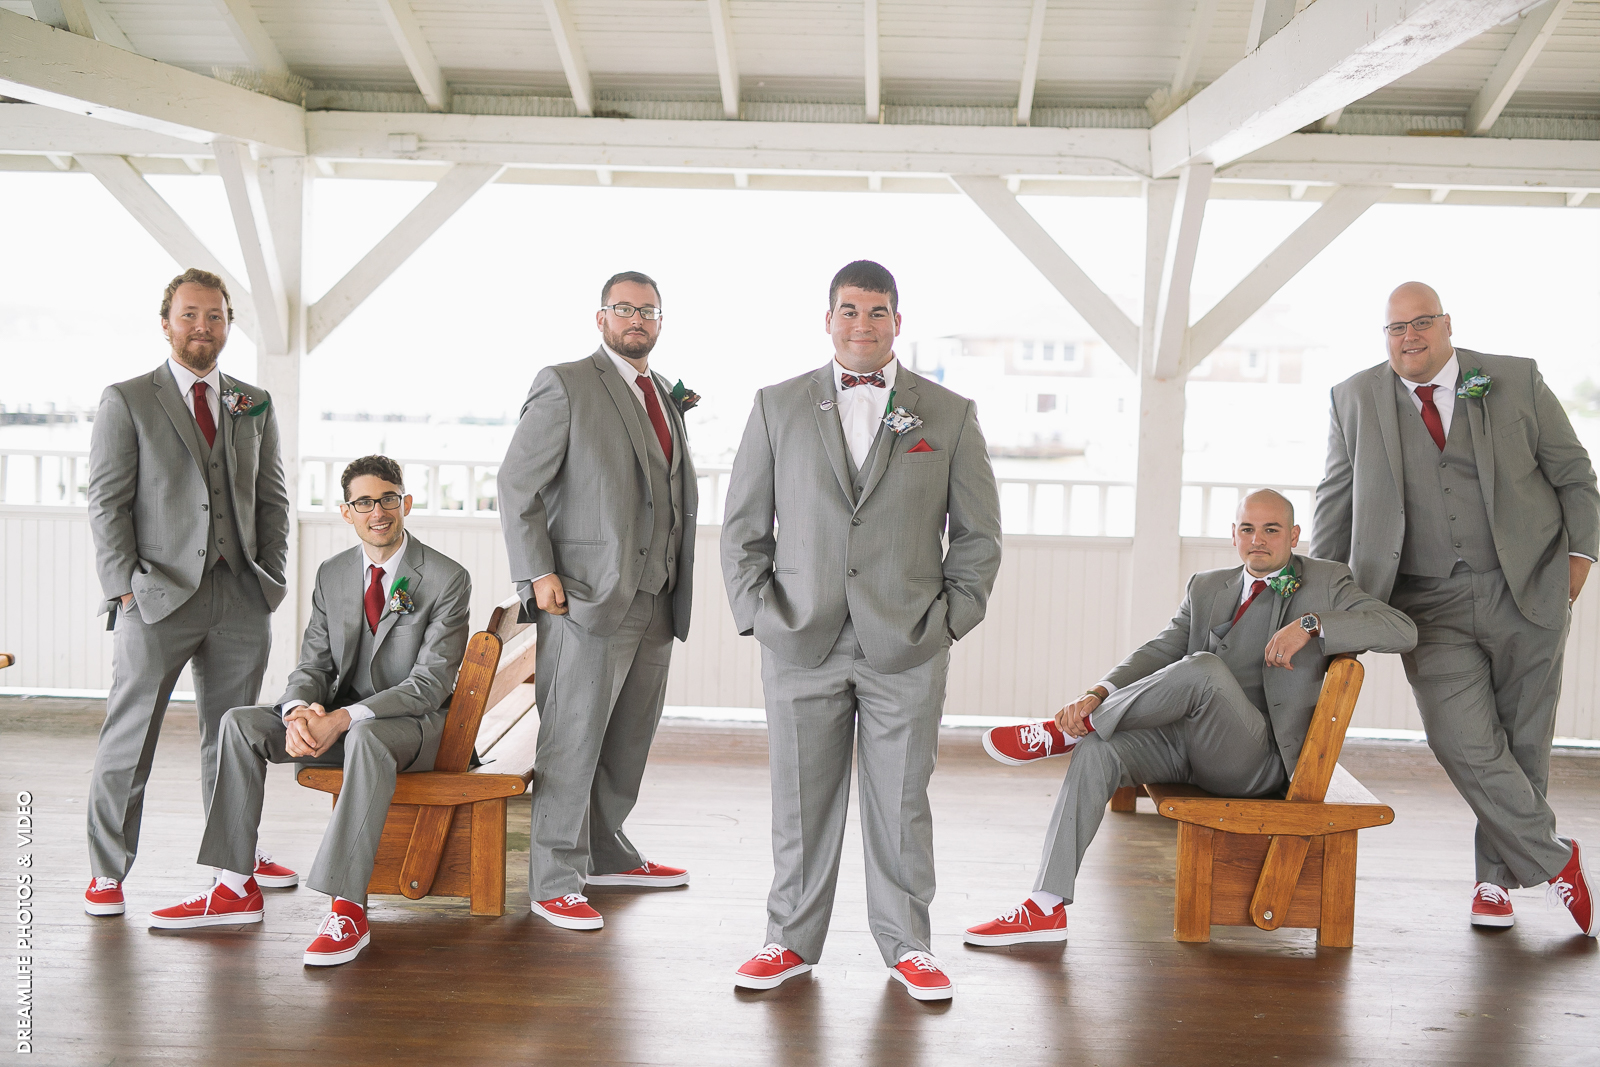 groom suits summer 2019